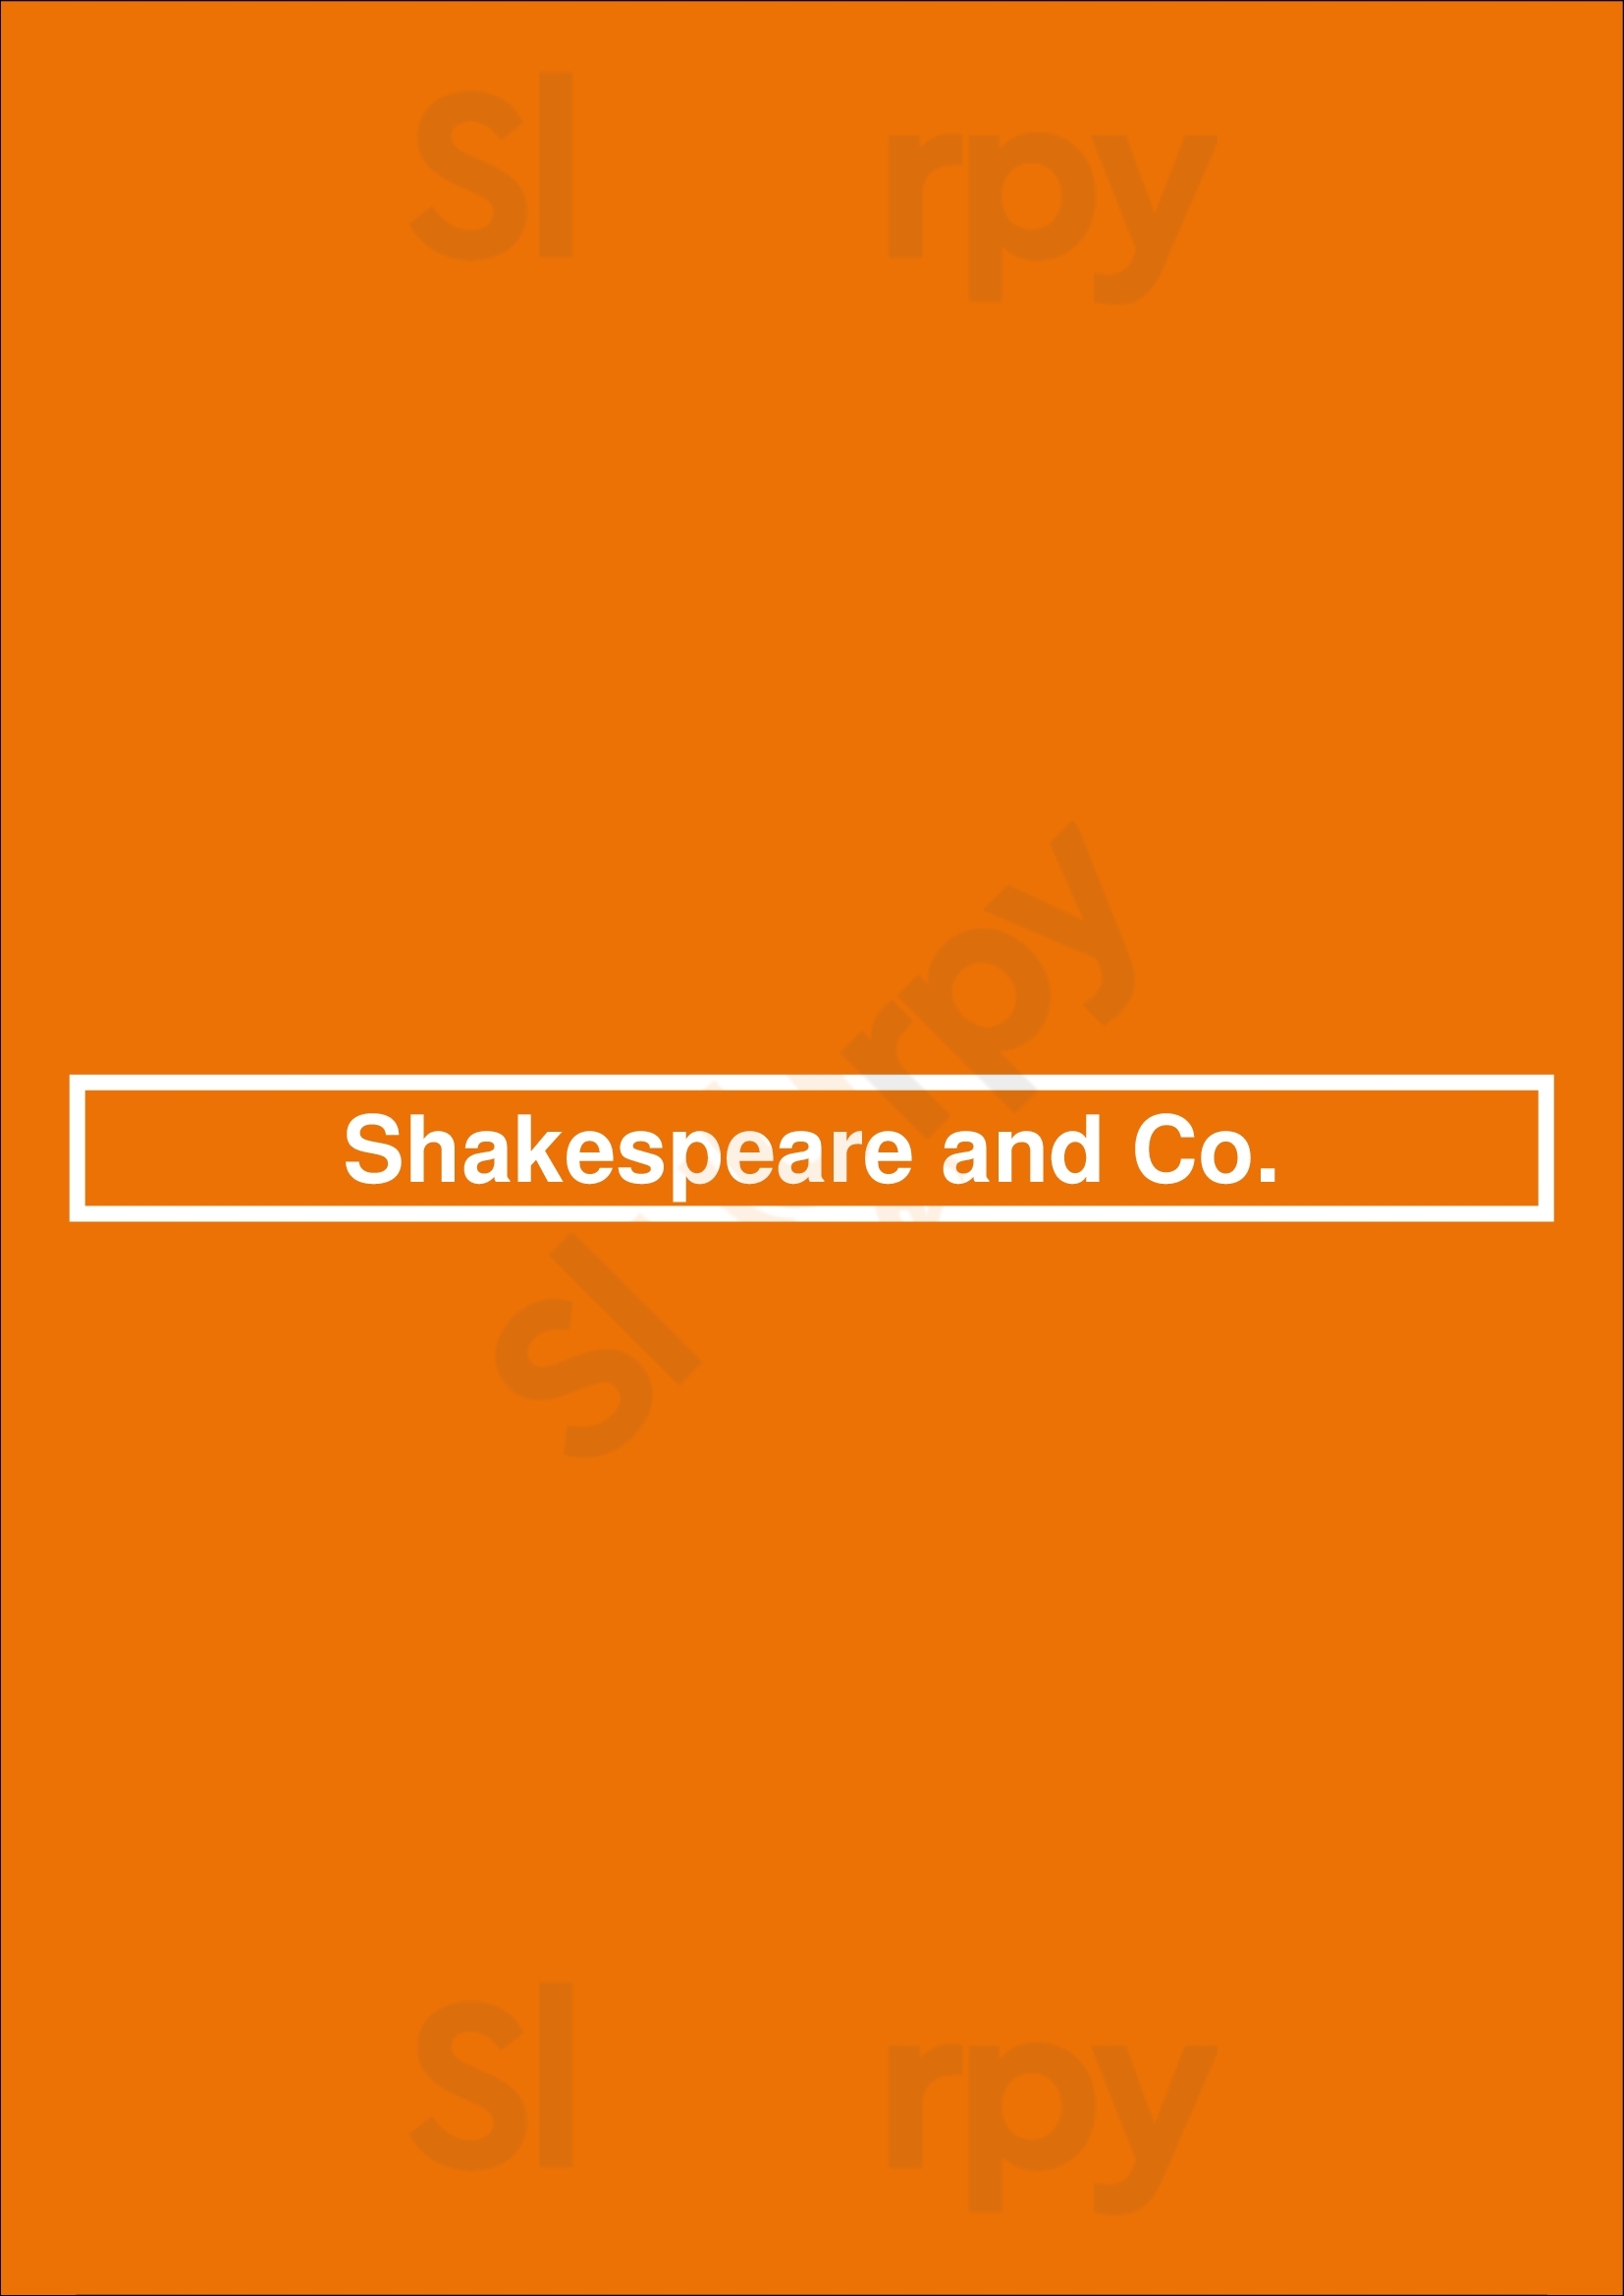 Shakespeare And Co. Lexington Menu - 1